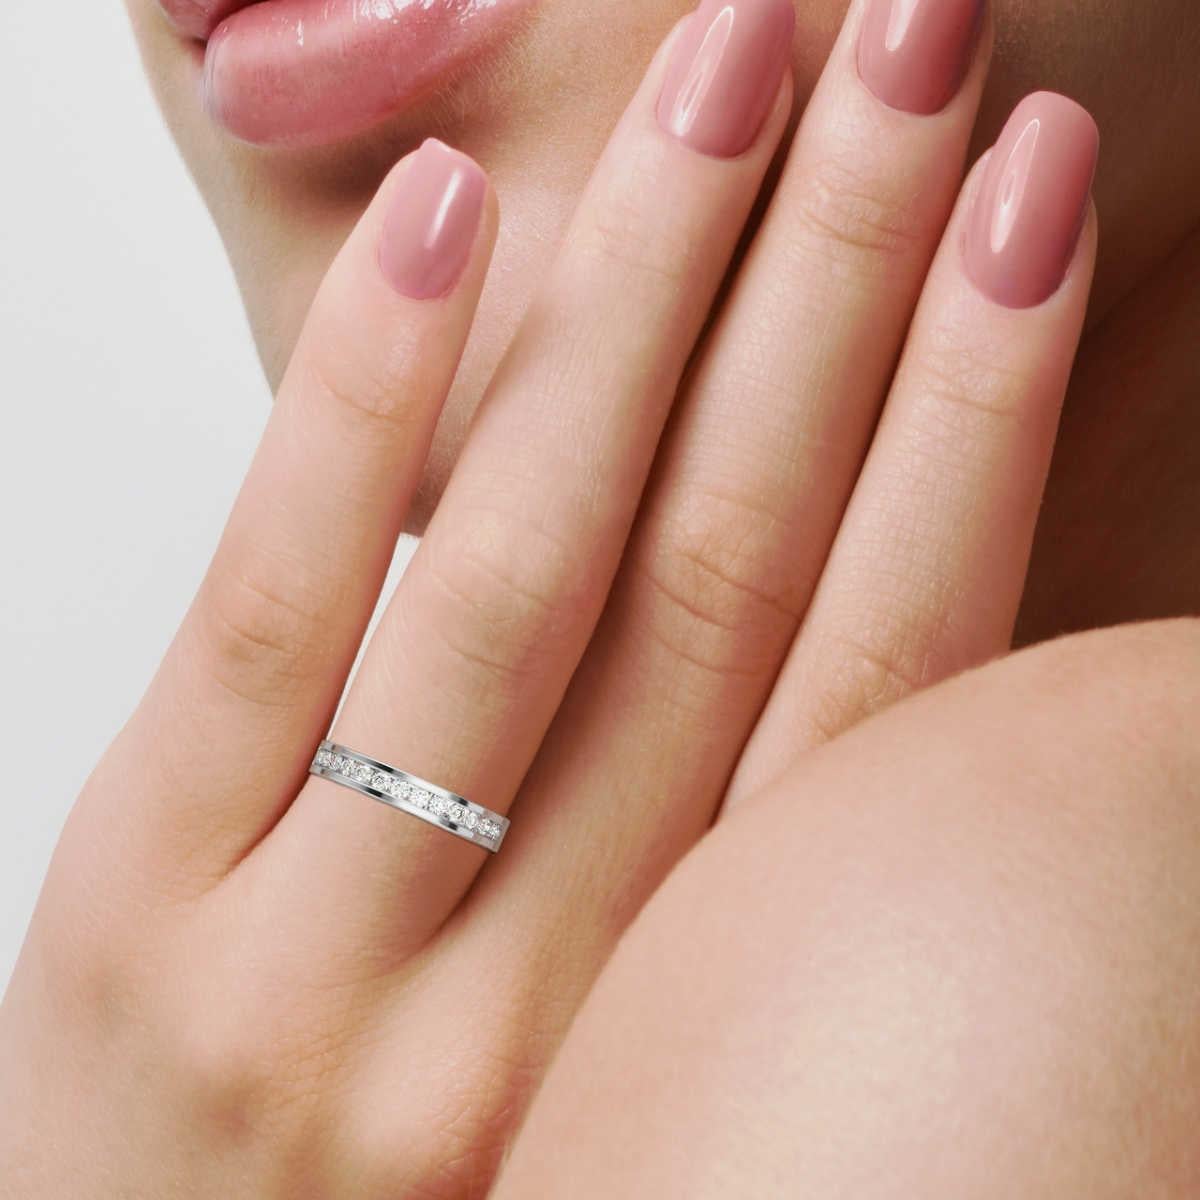 betty white wedding ring